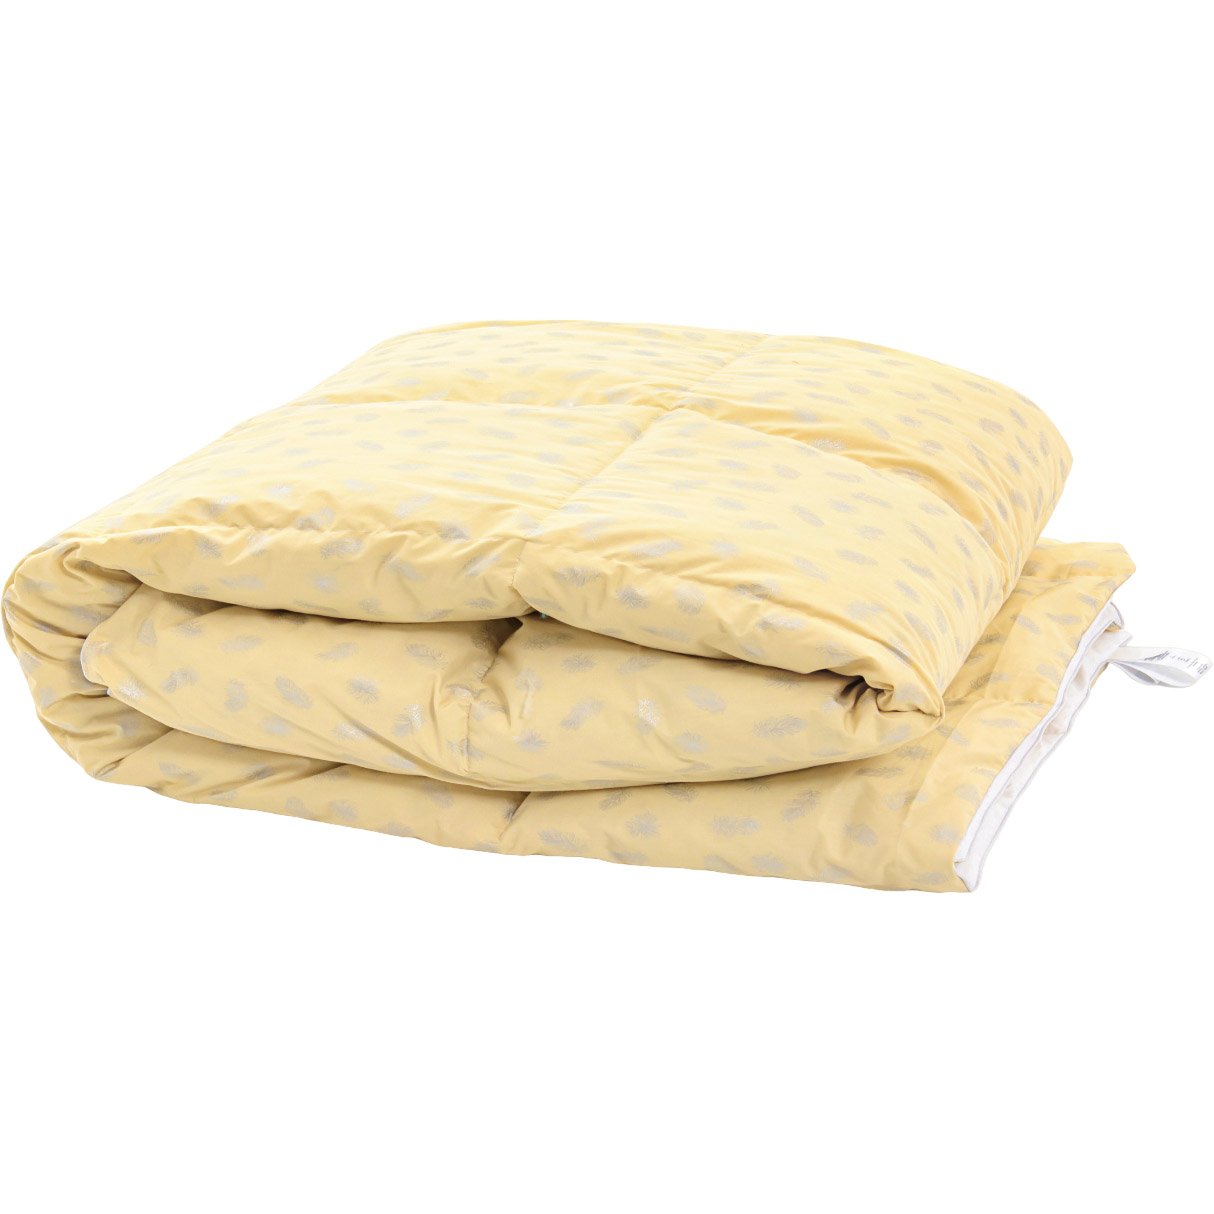 Одеяло пуховое MirSon Karmen №1833 Bio-Beige, 50% пух, двуспальное, 205x172, бежевое (2200003013160) - фото 1